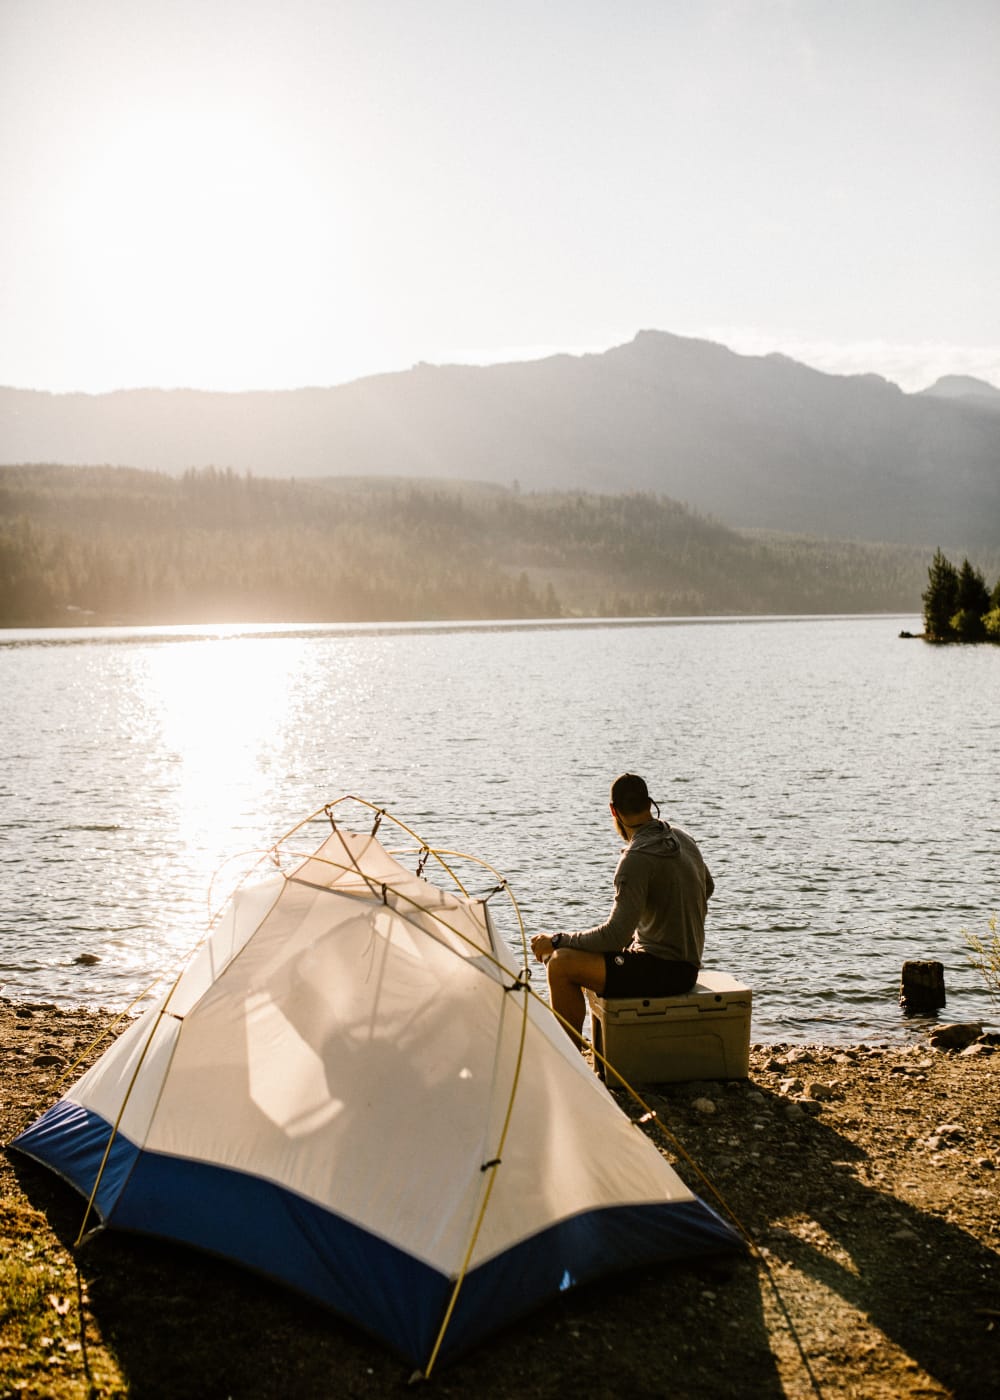 Camping near at The Kestrel in Bozeman, Montana